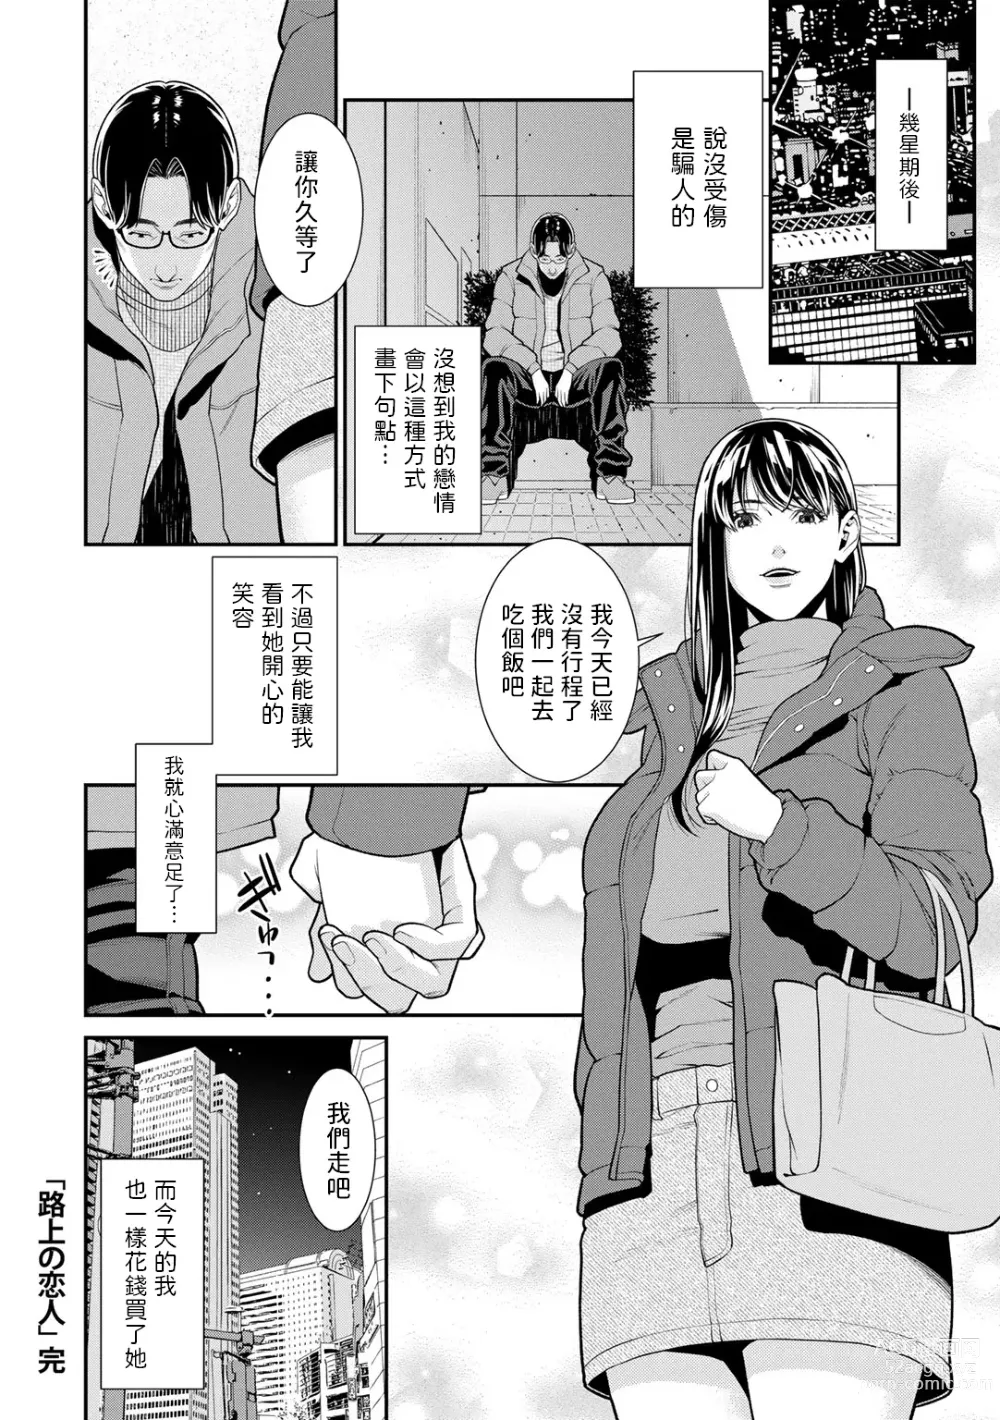 Page 175 of manga Onna ni Kagi wa Kakerarenai